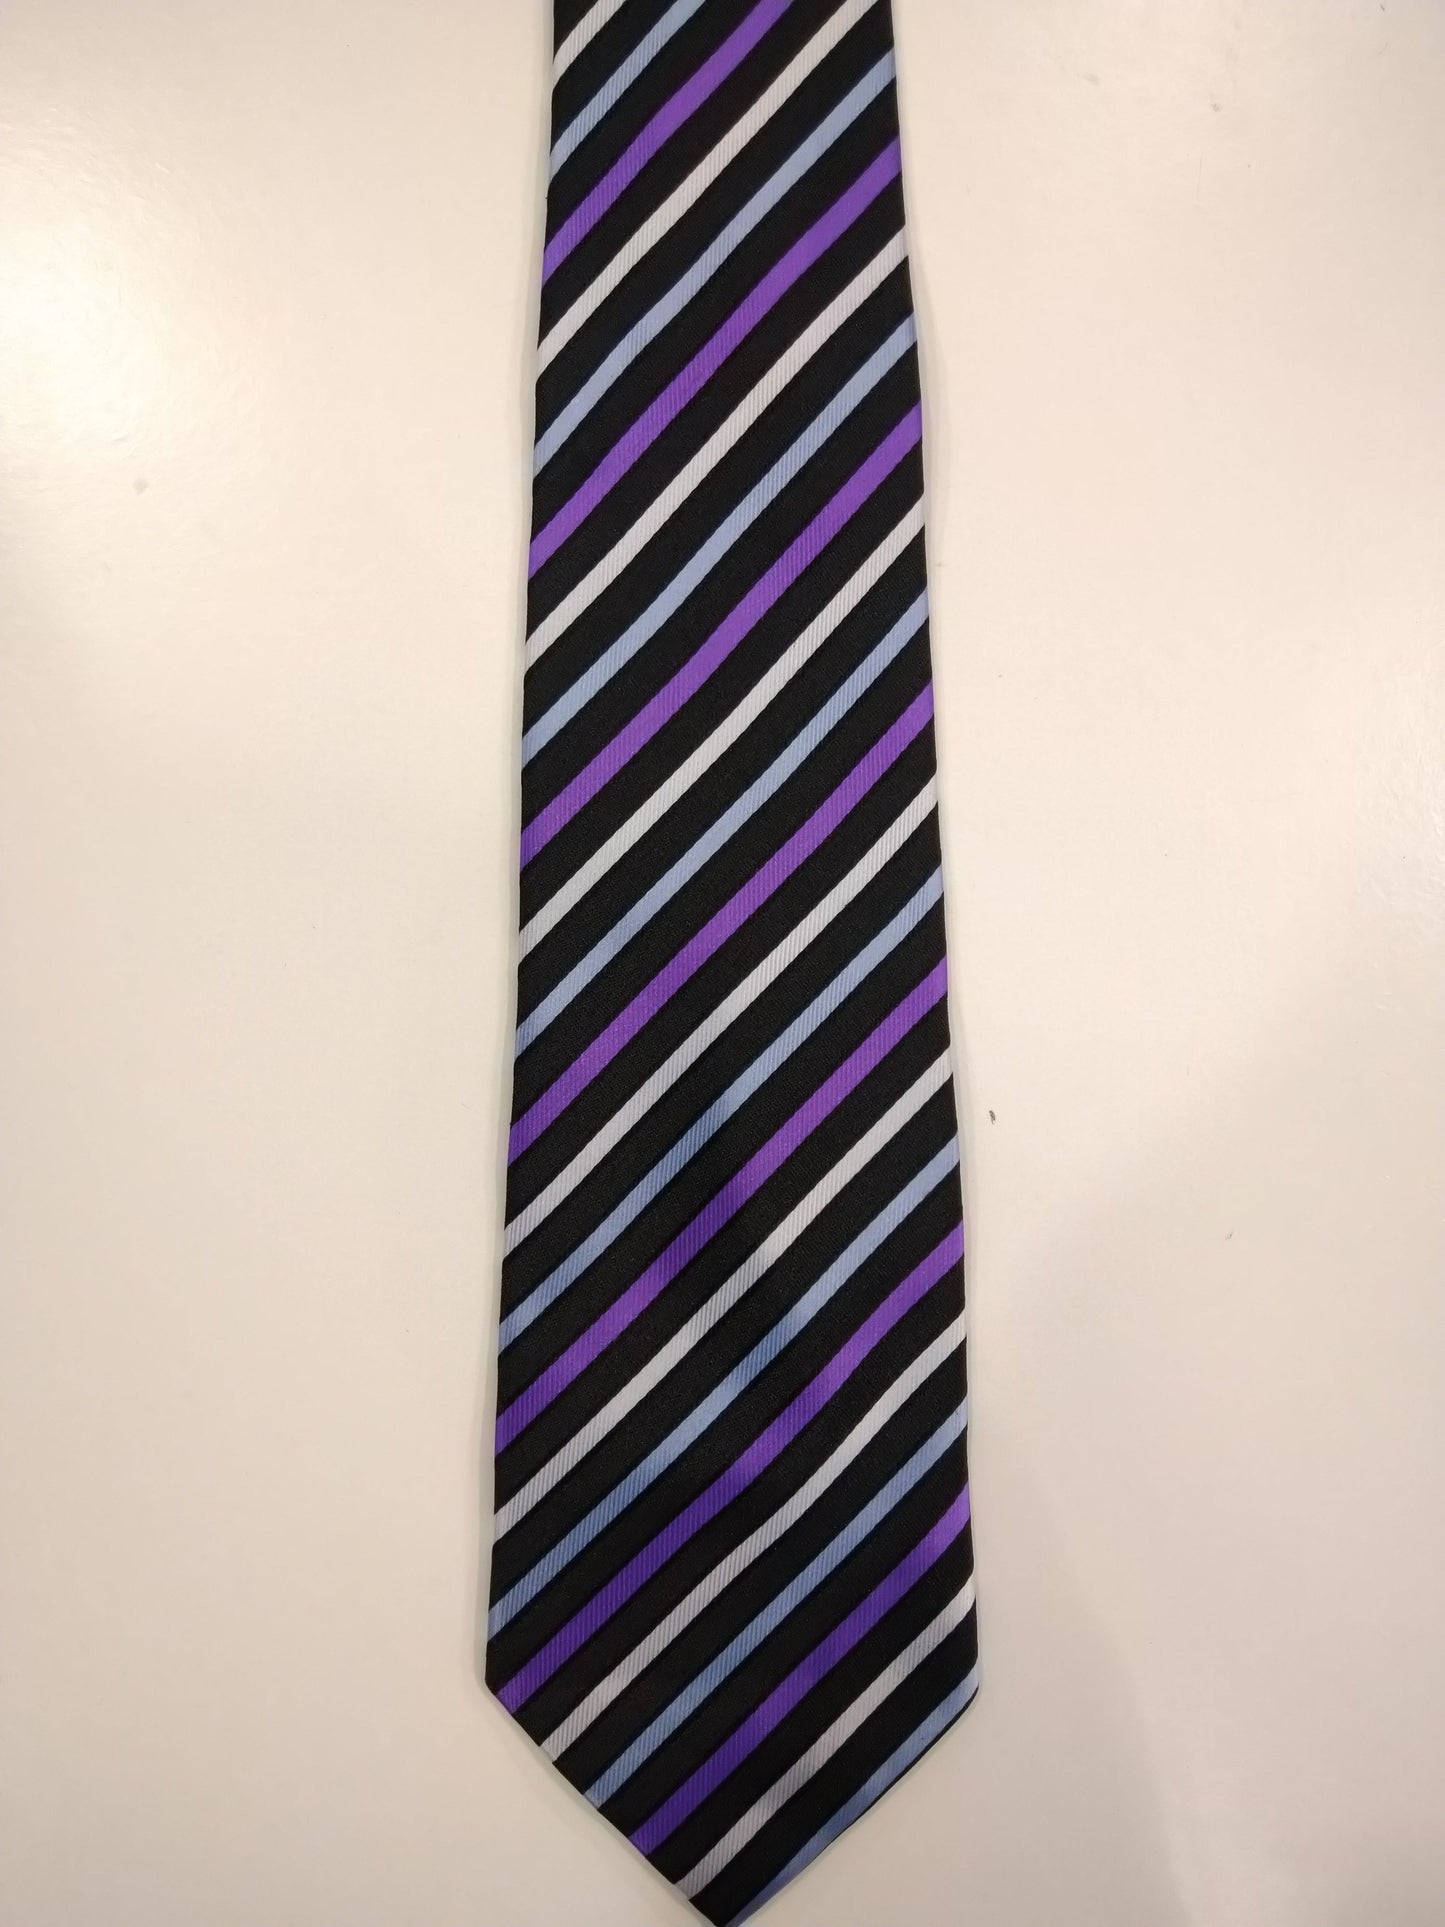 Polyester gestreepte stropdas. Paars wit zwart gestreept.